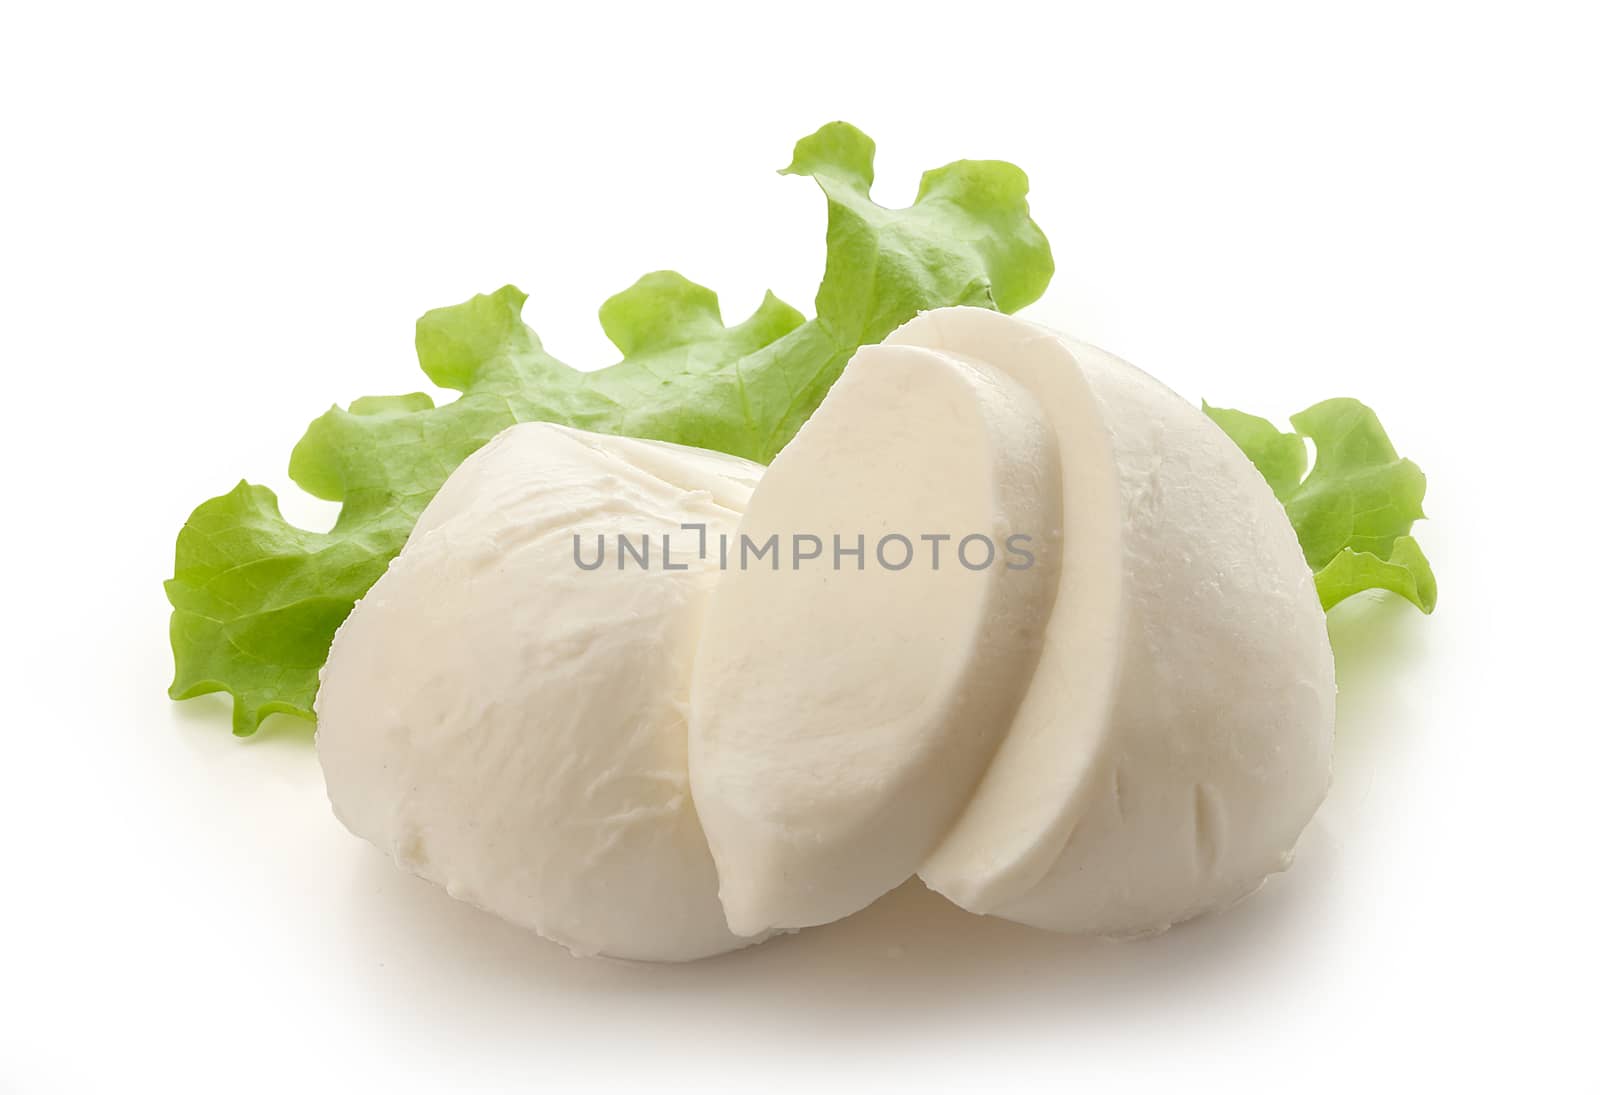 Two mozzarella balls with lettuce by Angorius